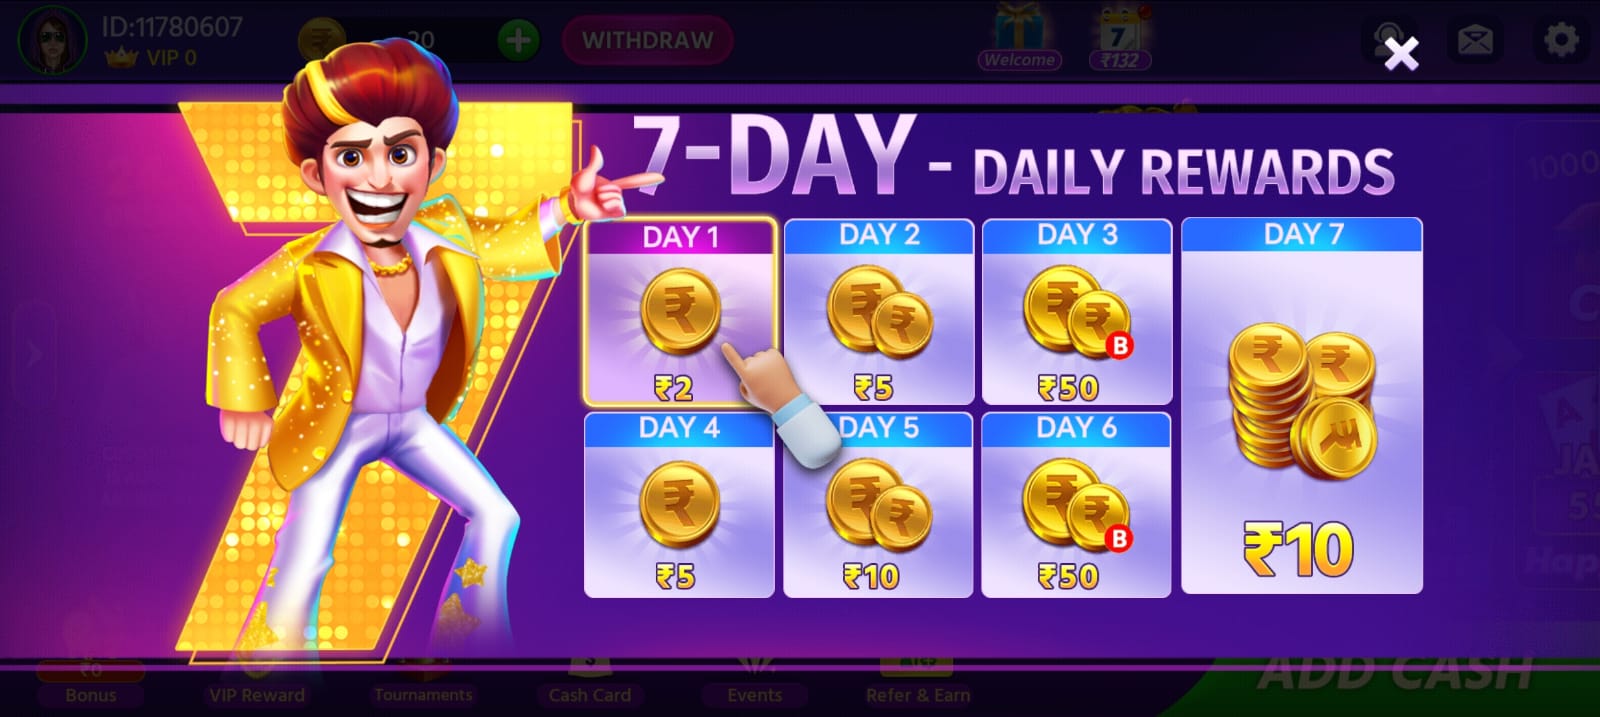 Daav Patti App 7 Day Reward